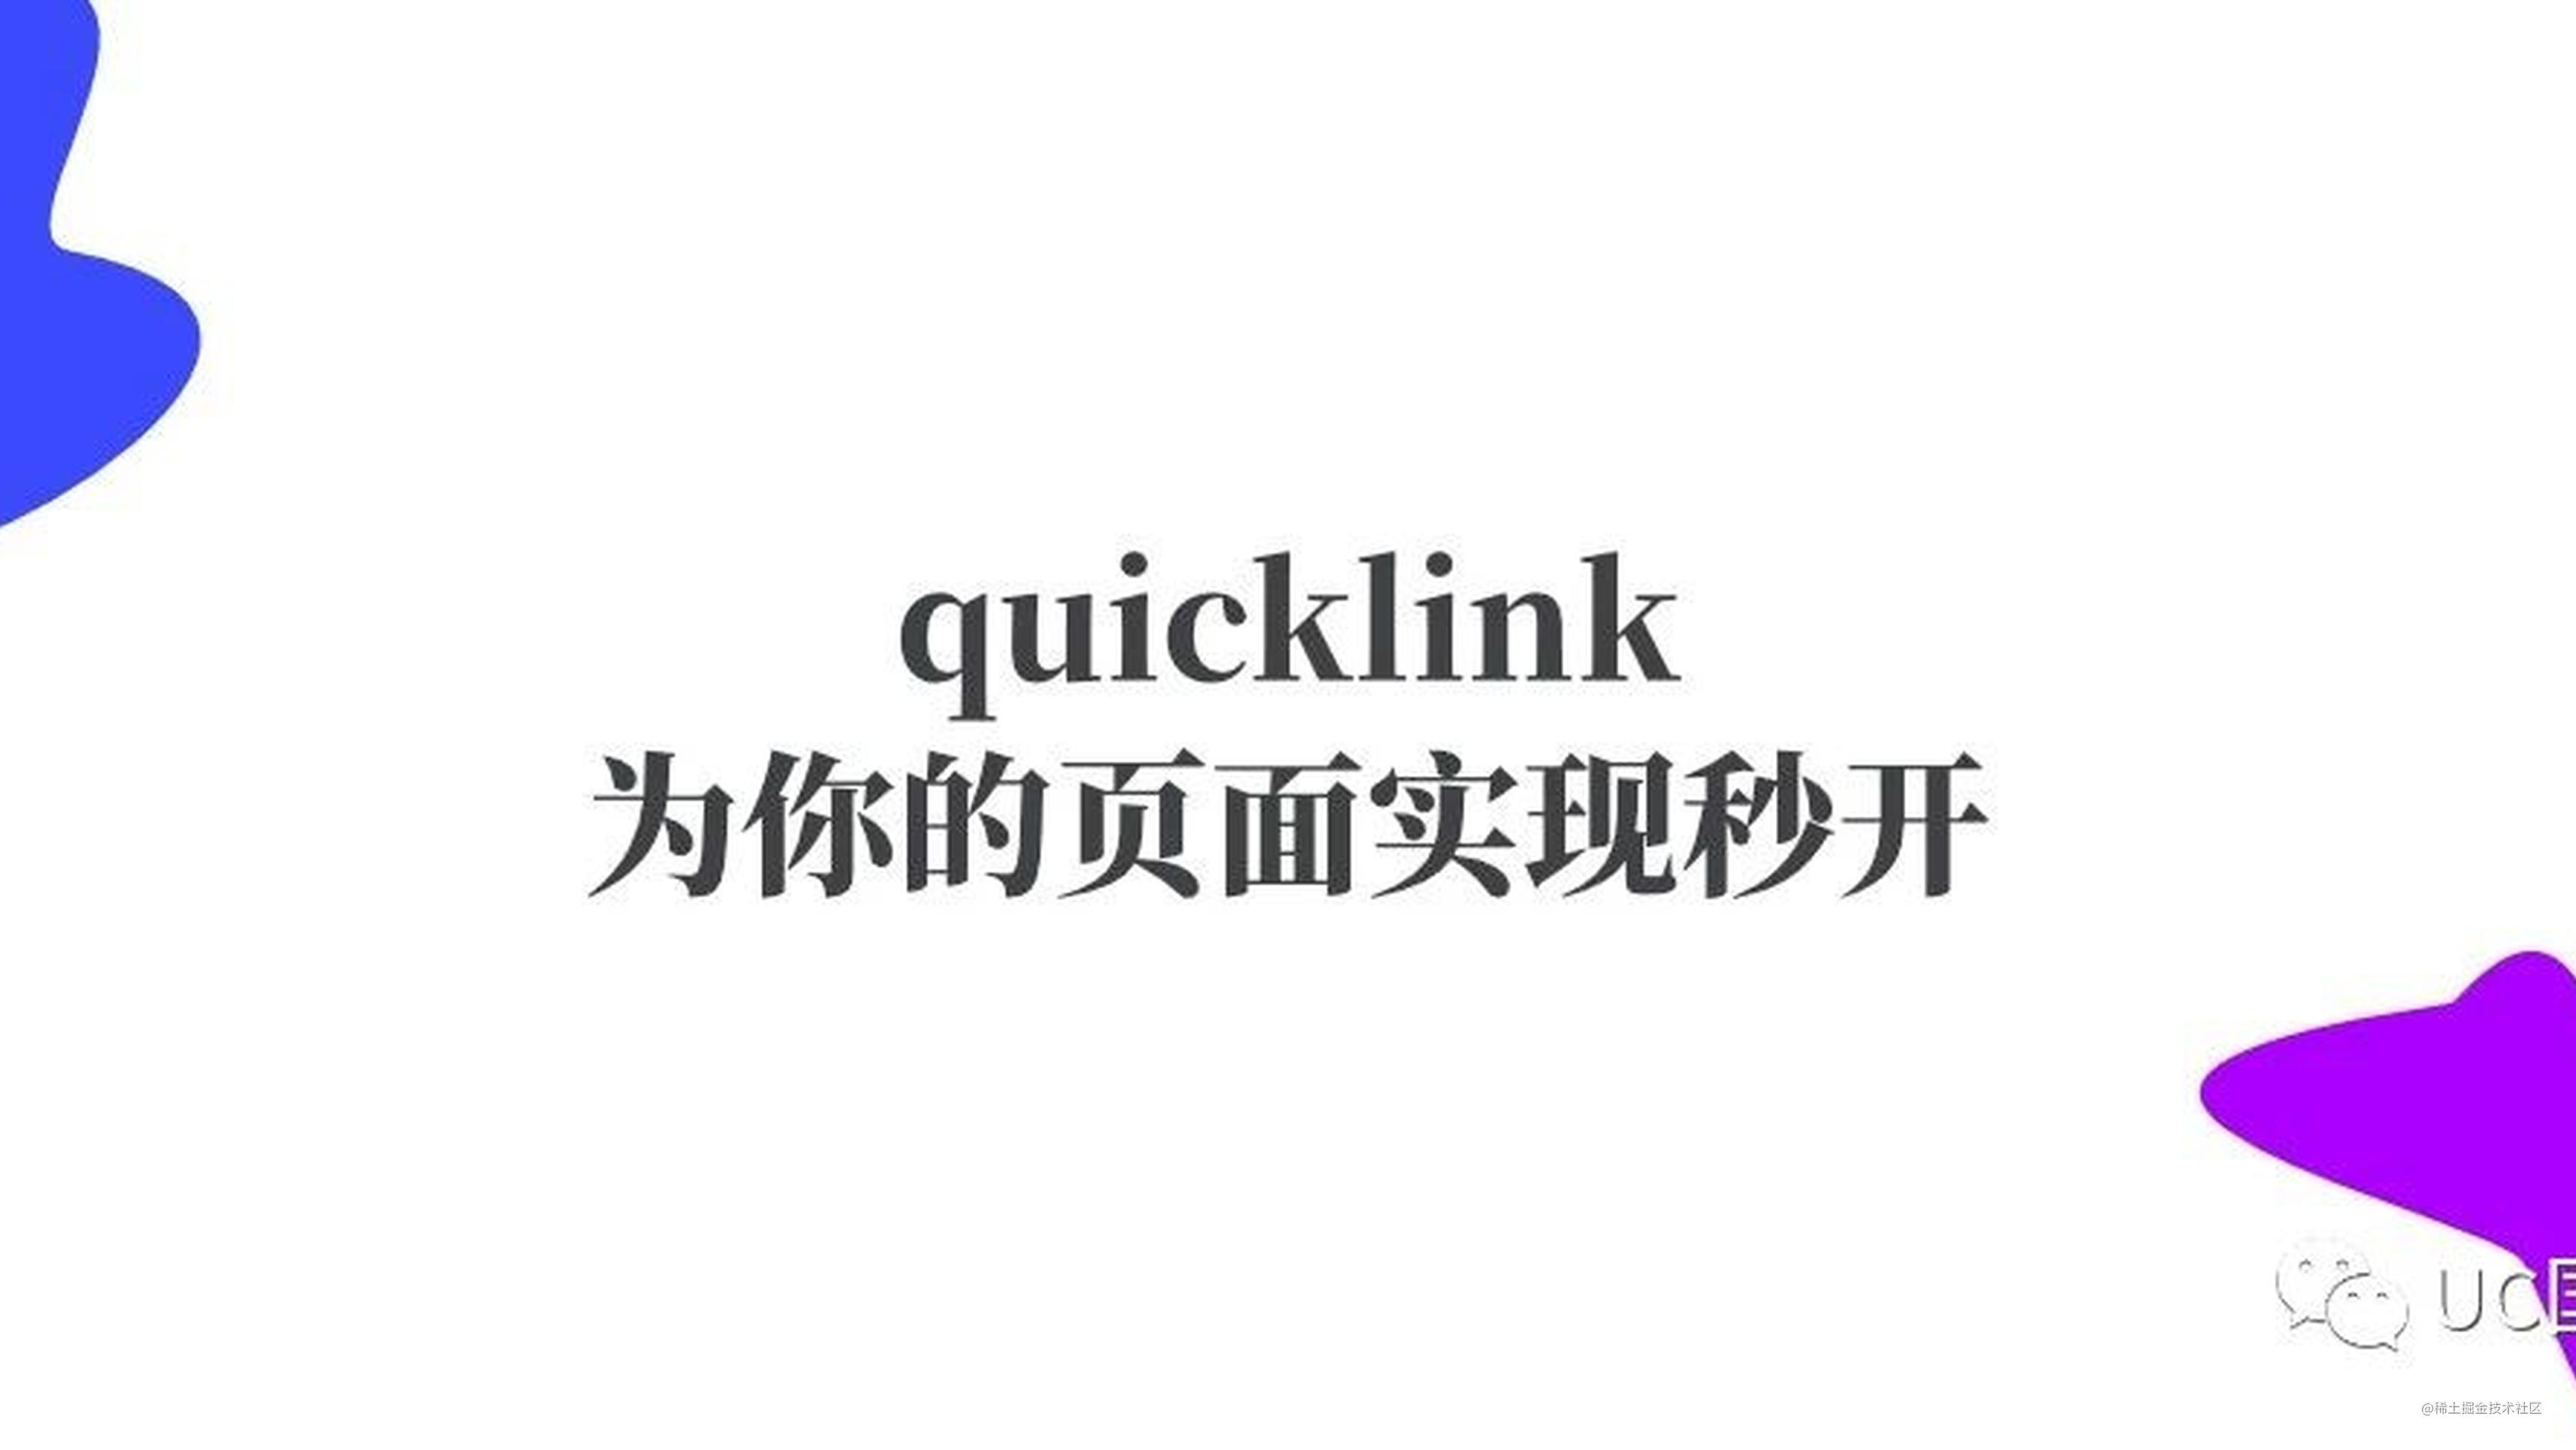 quicklink 为你的页面实现秒开